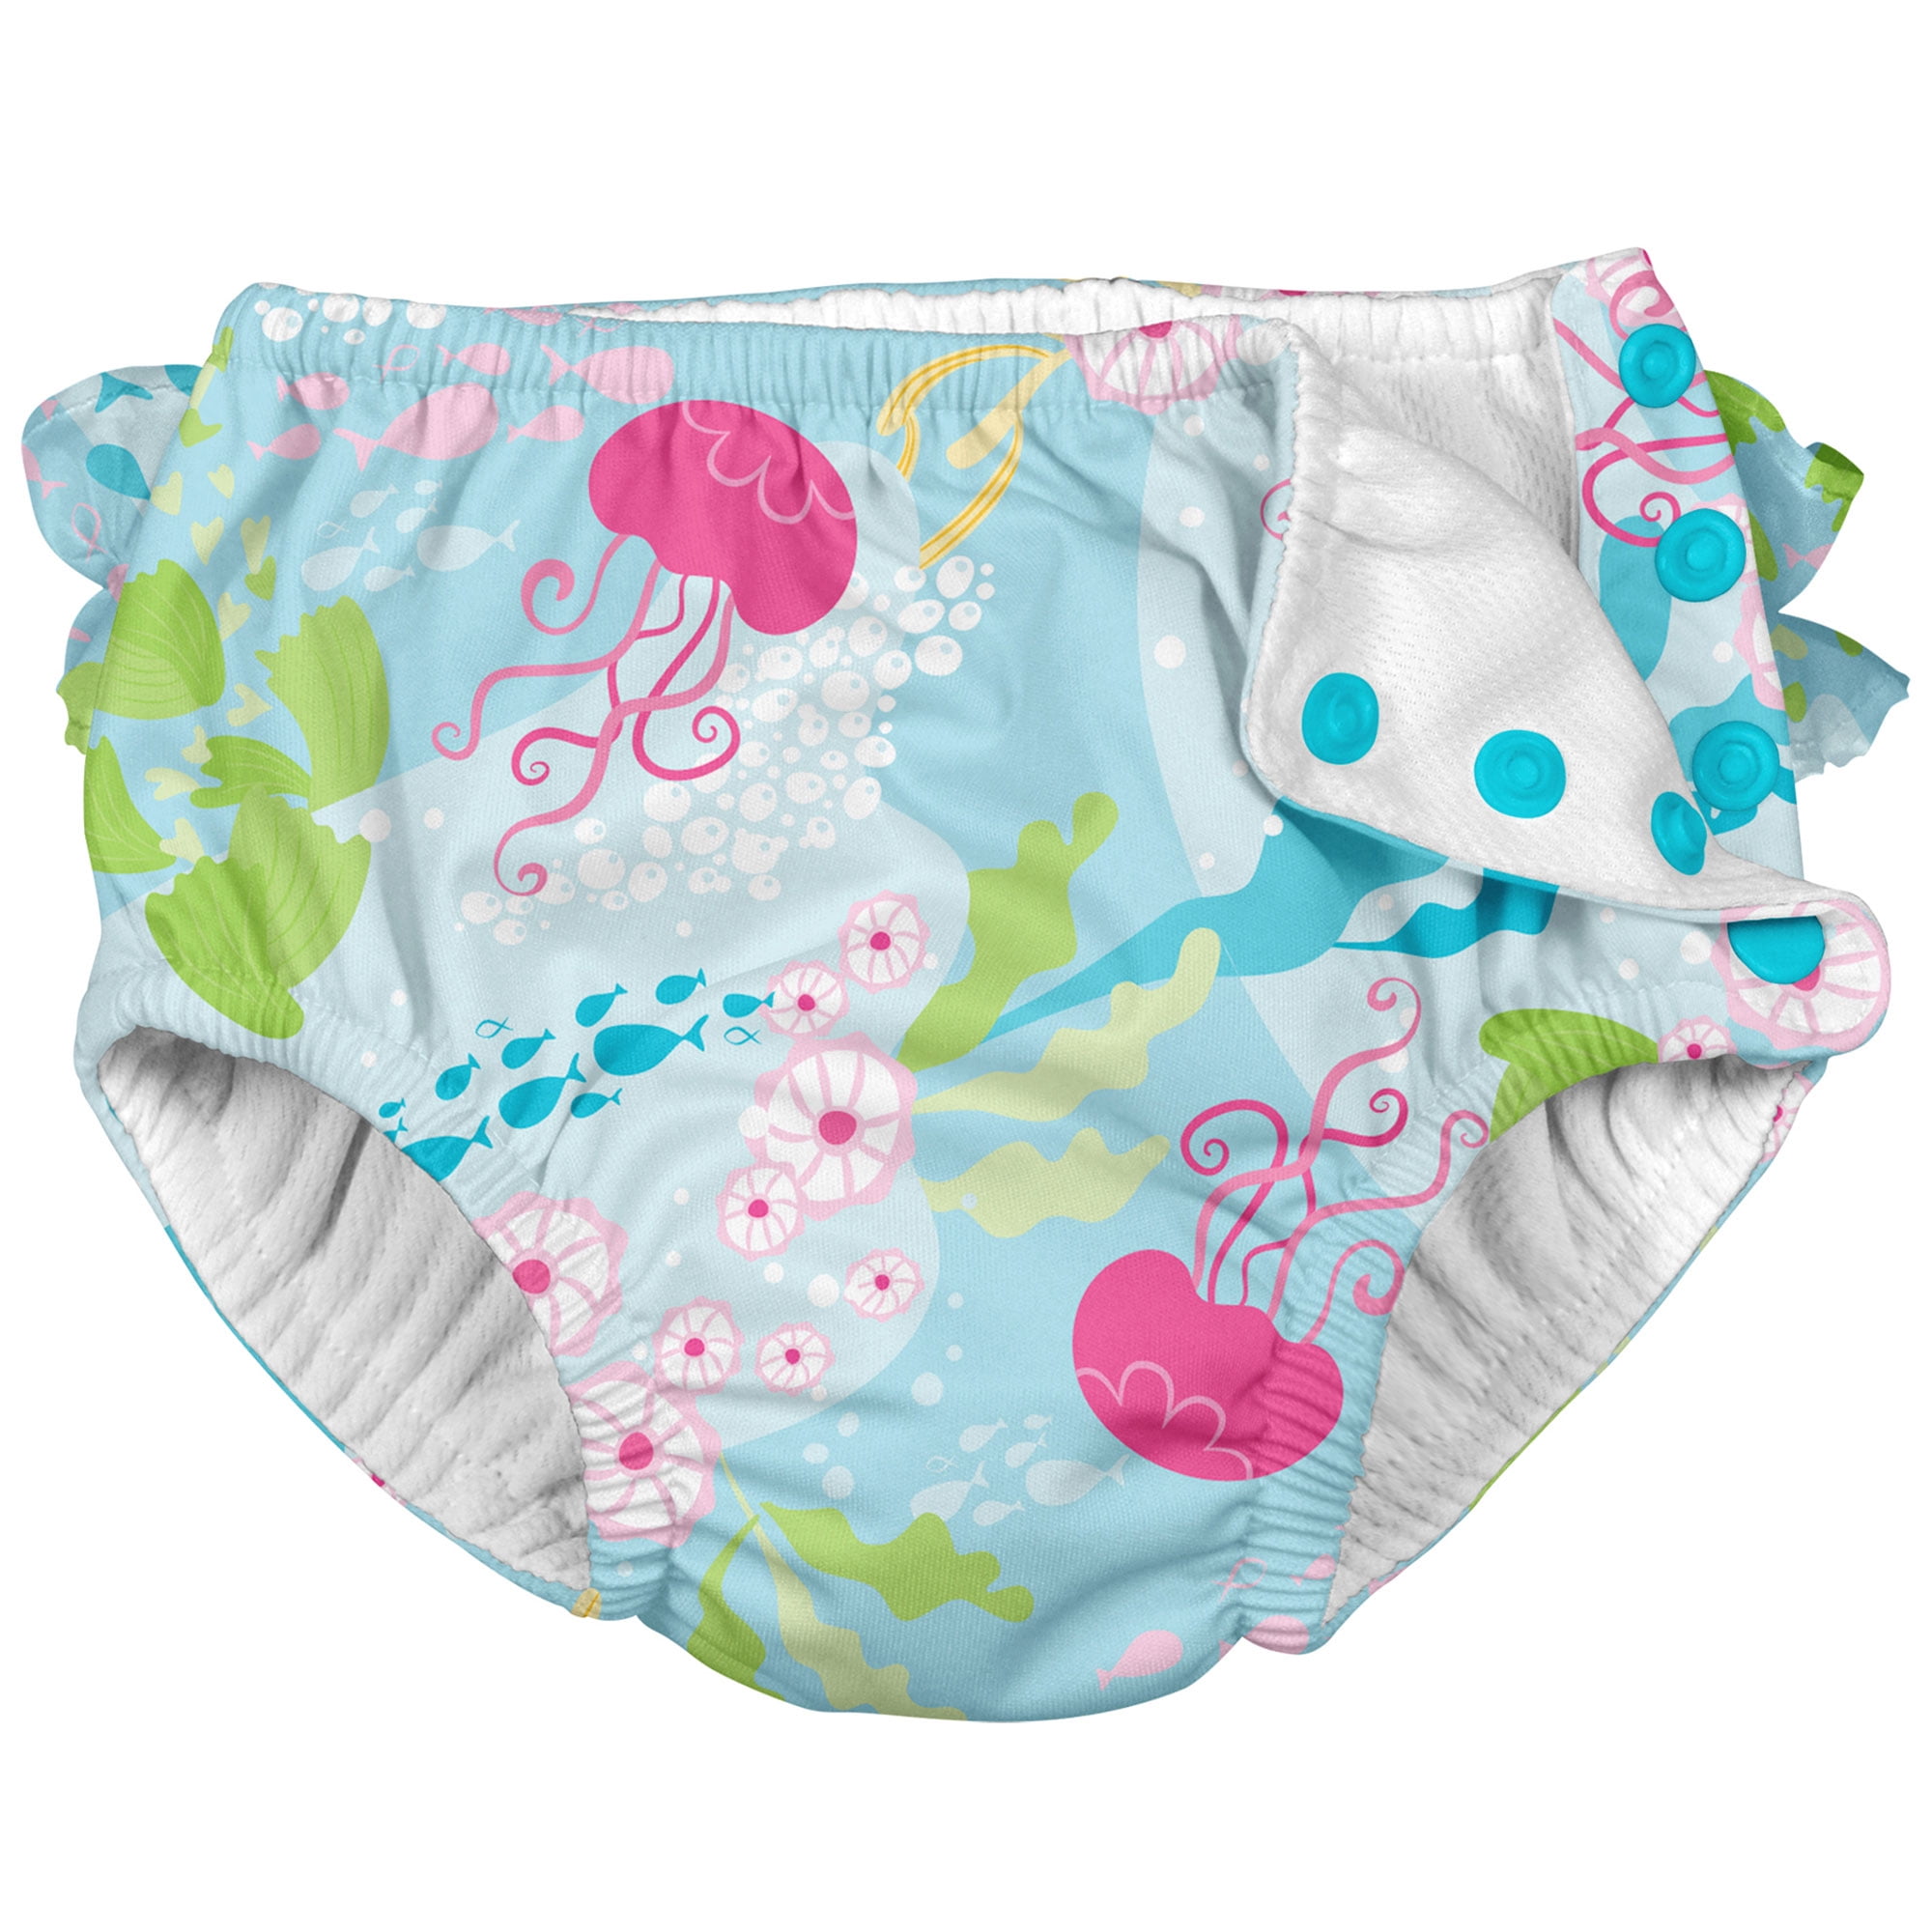 Iplay Infant Swim Diaper Size Chart